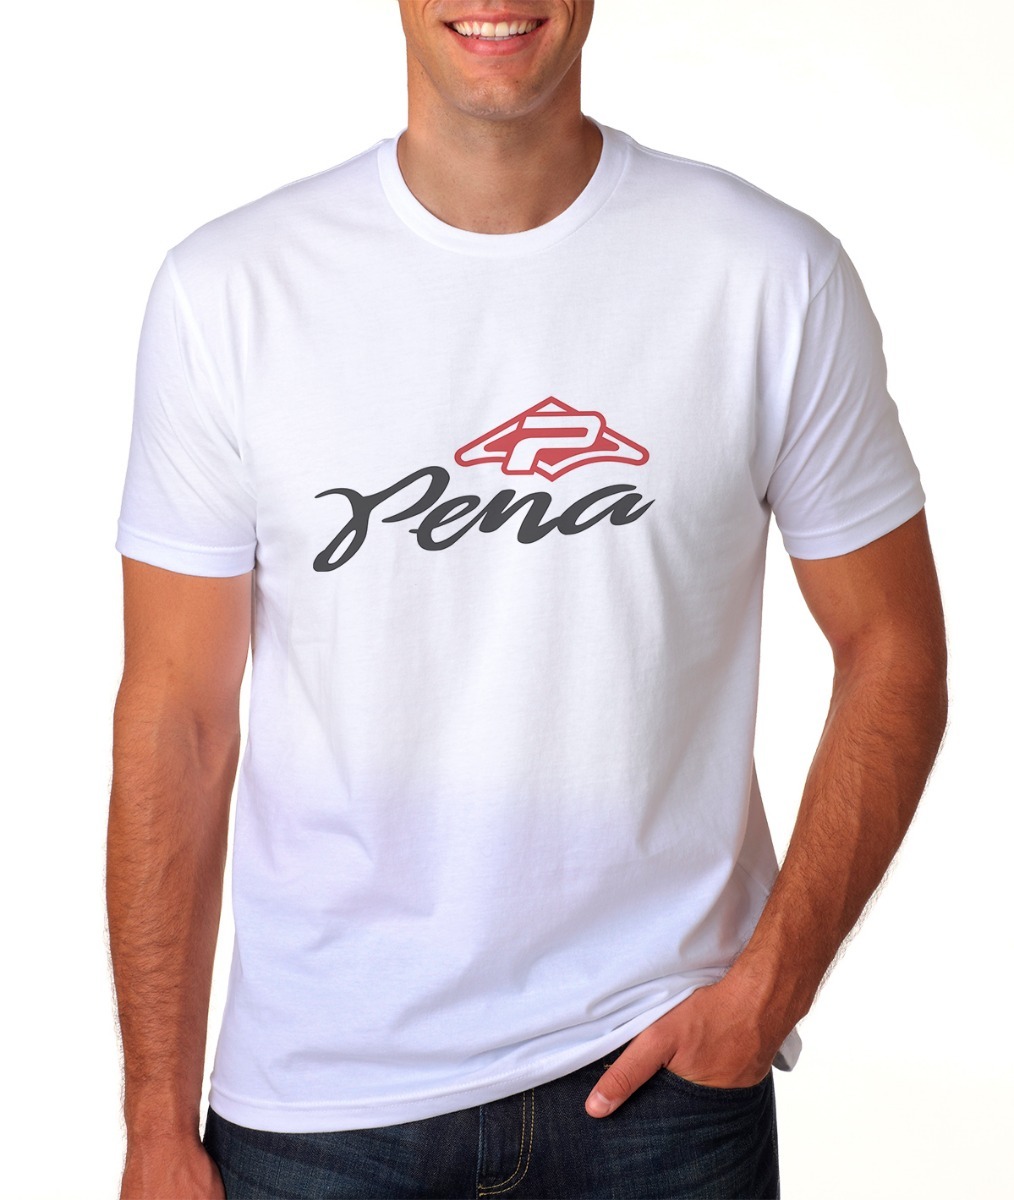 Camisetas De Peña